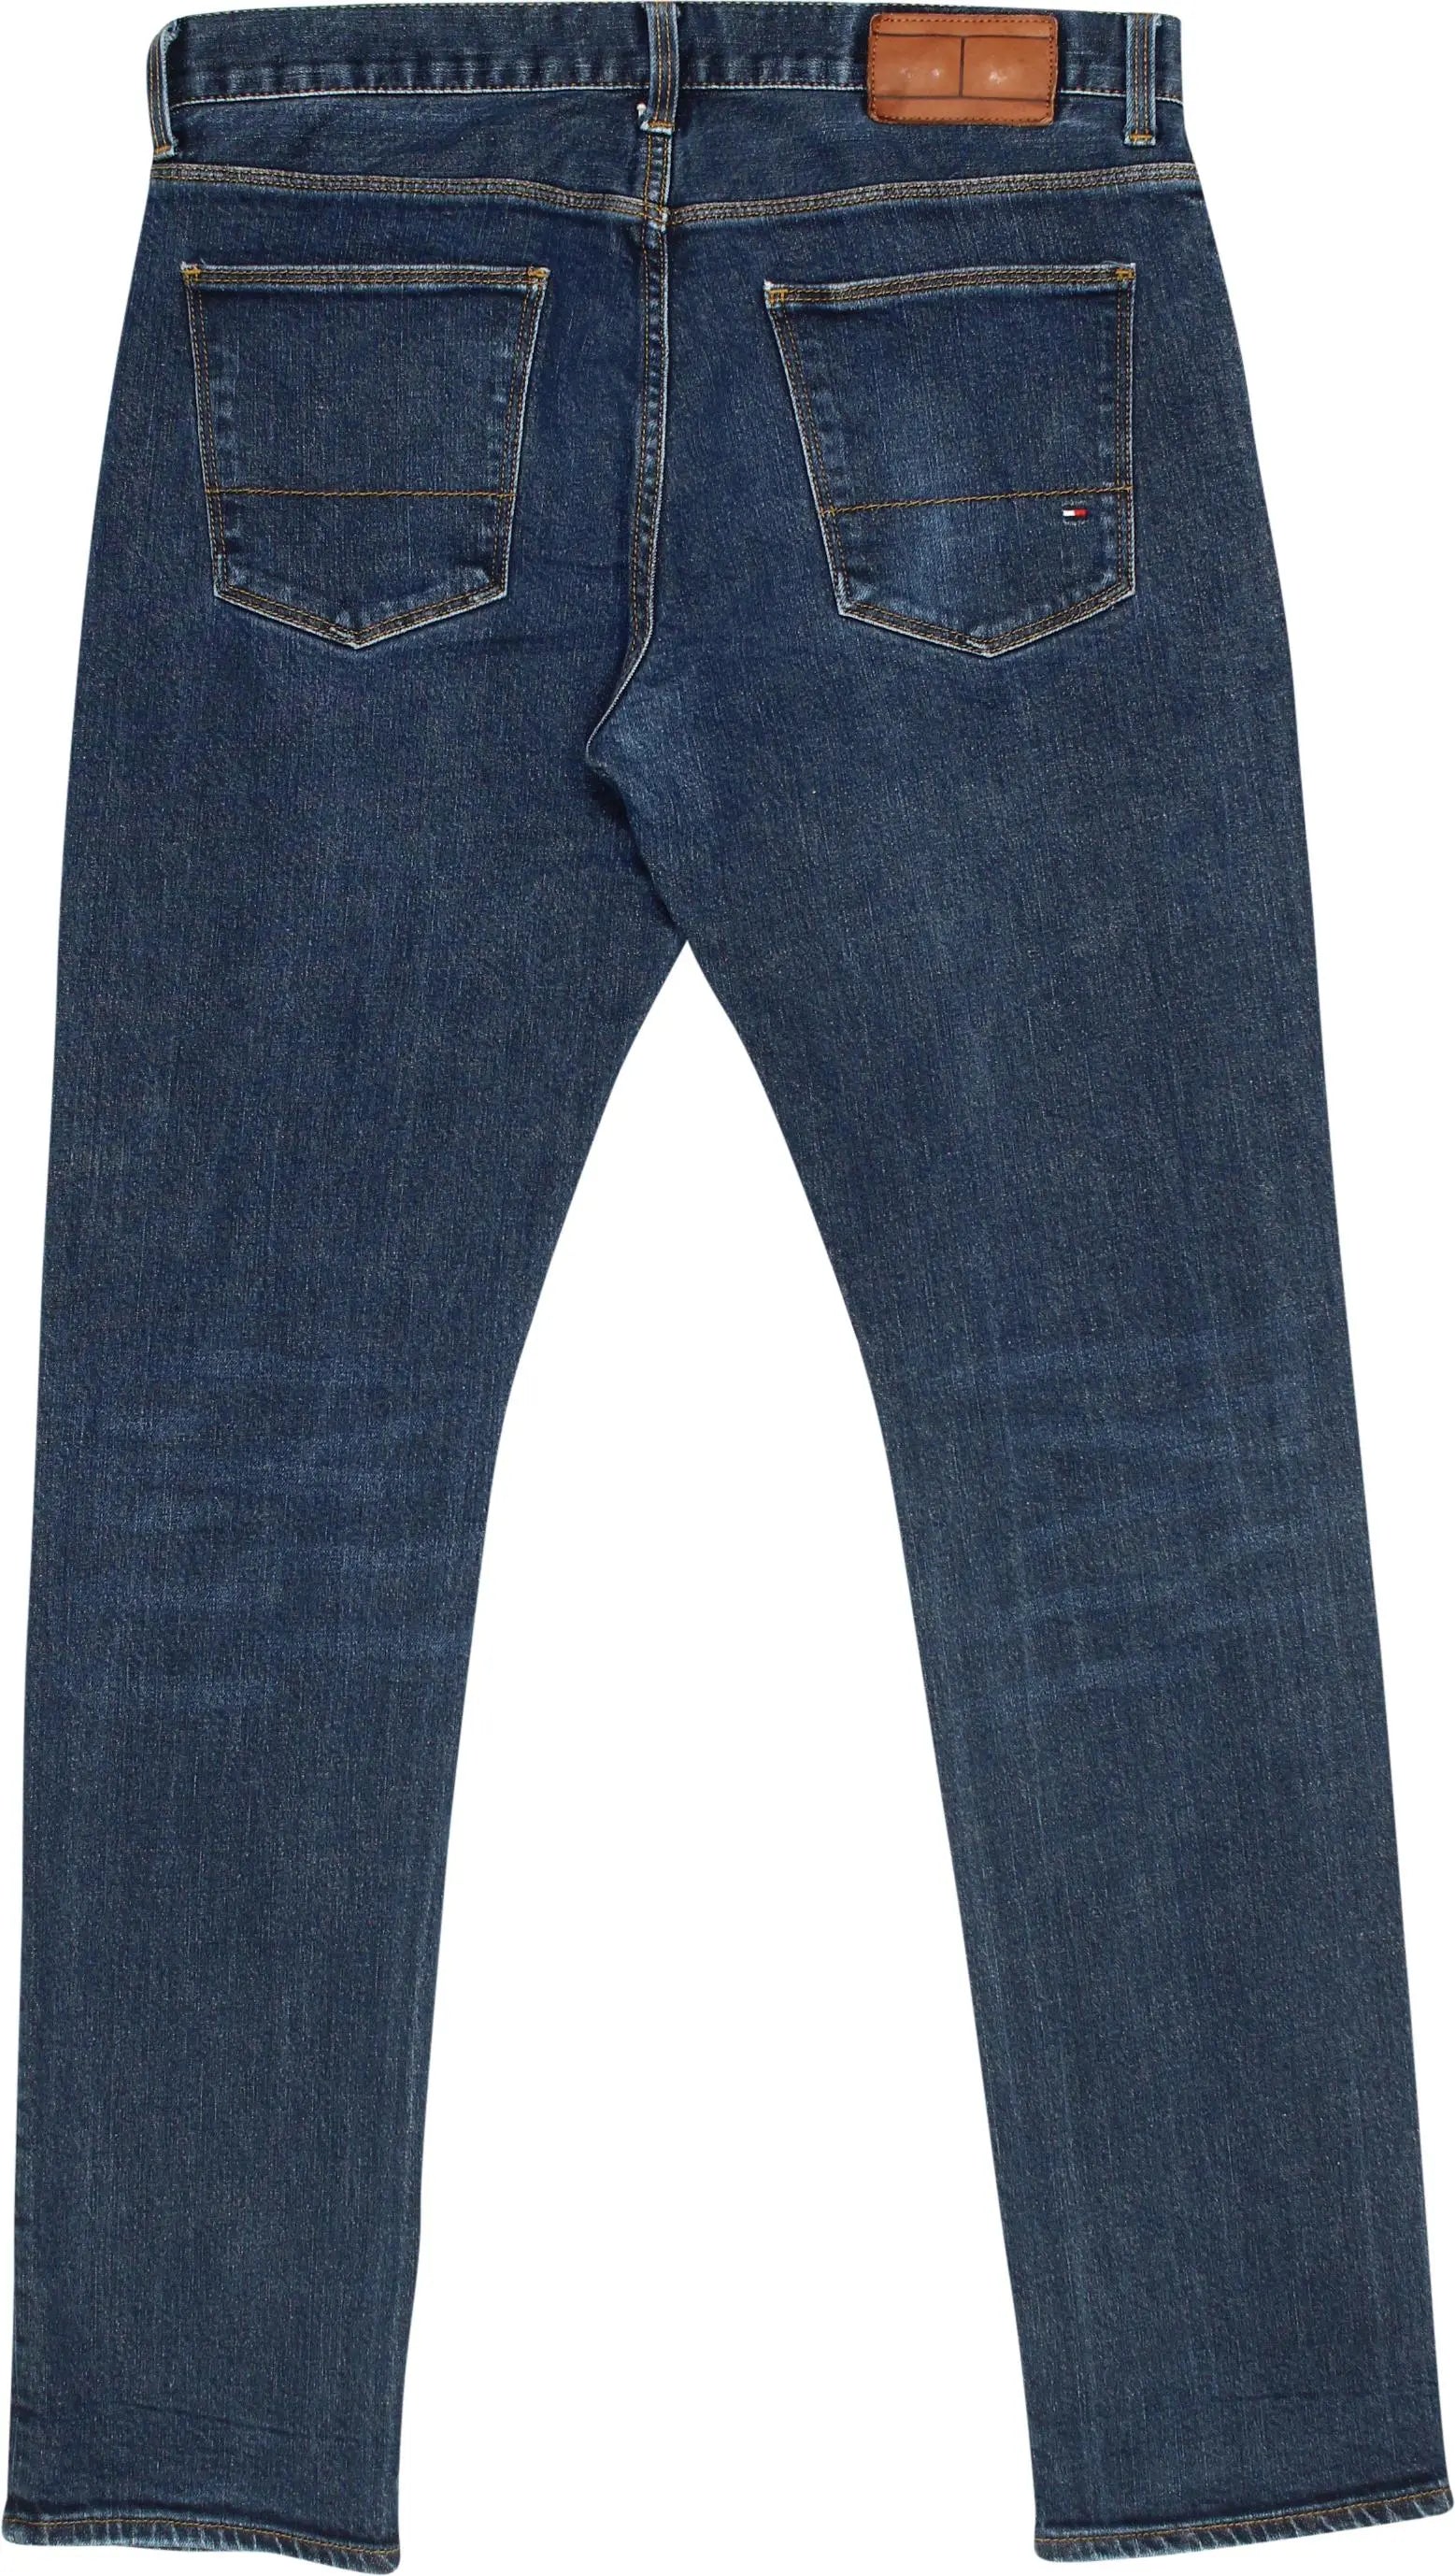 Tommy Hilfiger - Tommy Hilfiger Slim Fit Jeans- ThriftTale.com - Vintage and second handclothing